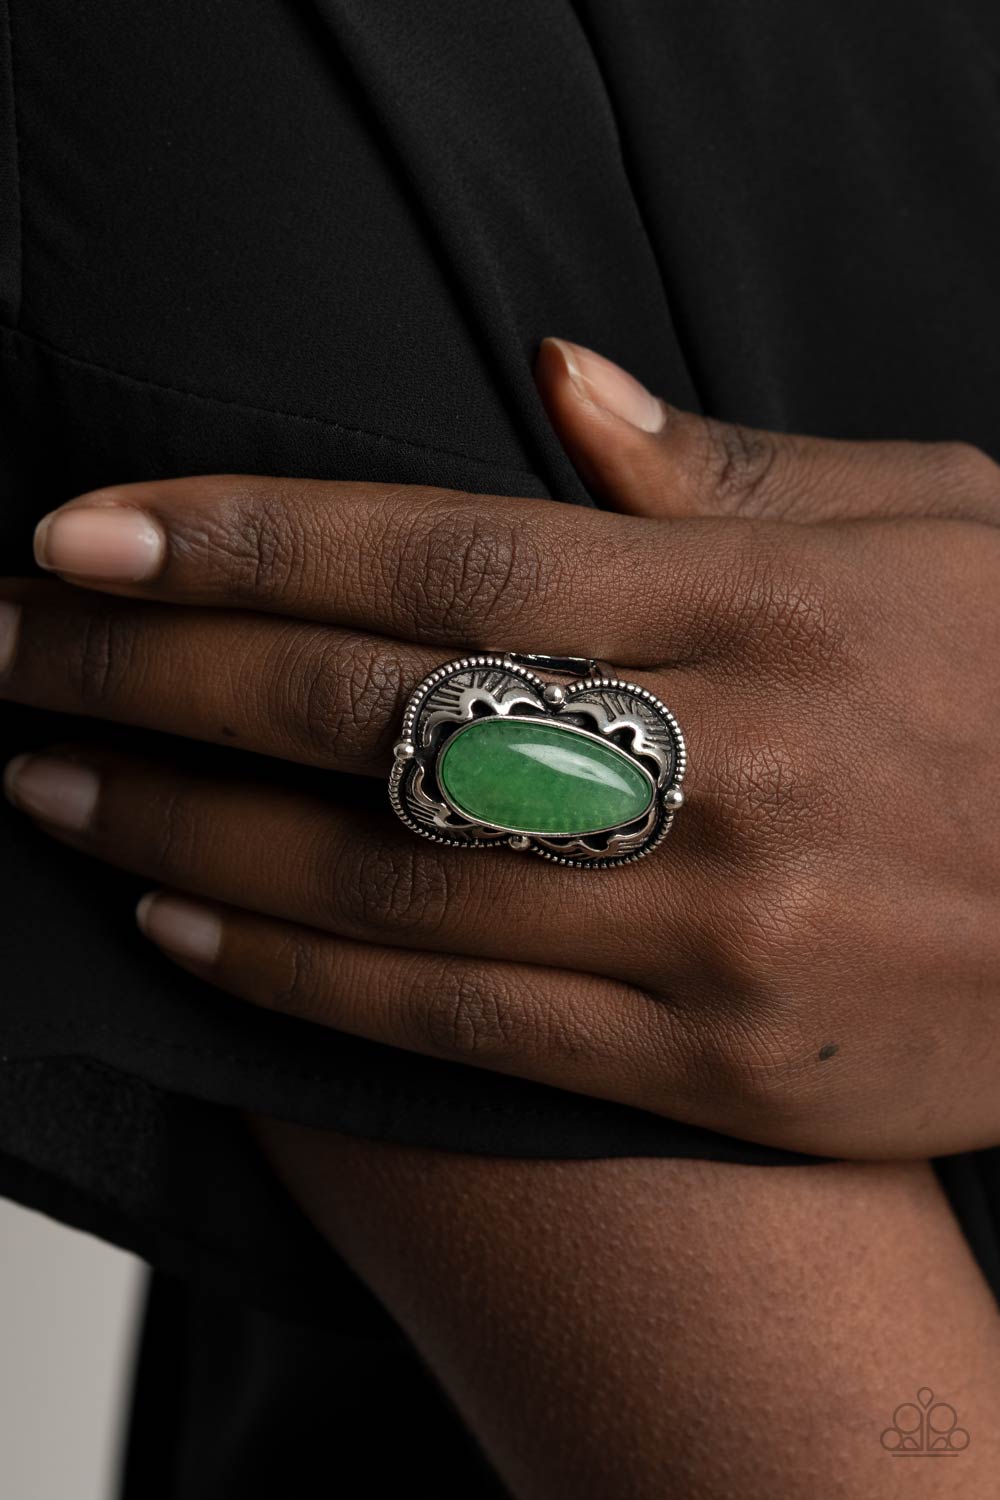 Mystical Mambo - Green ring